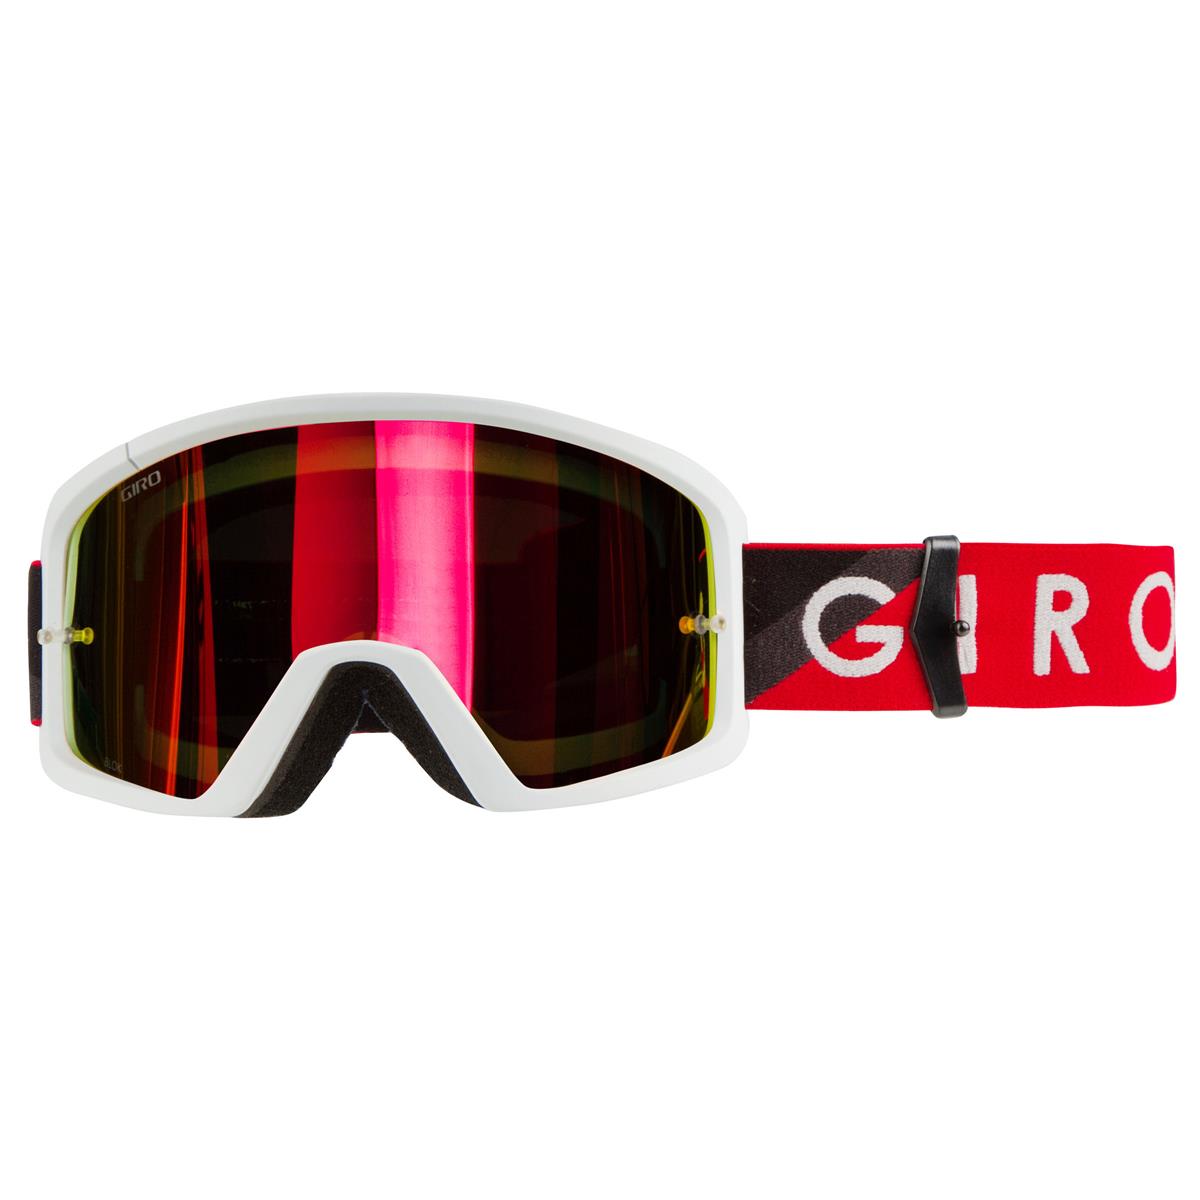 Giro Maschera Blok Rosso/Grigio - Amber Trasparente Anti-Fog